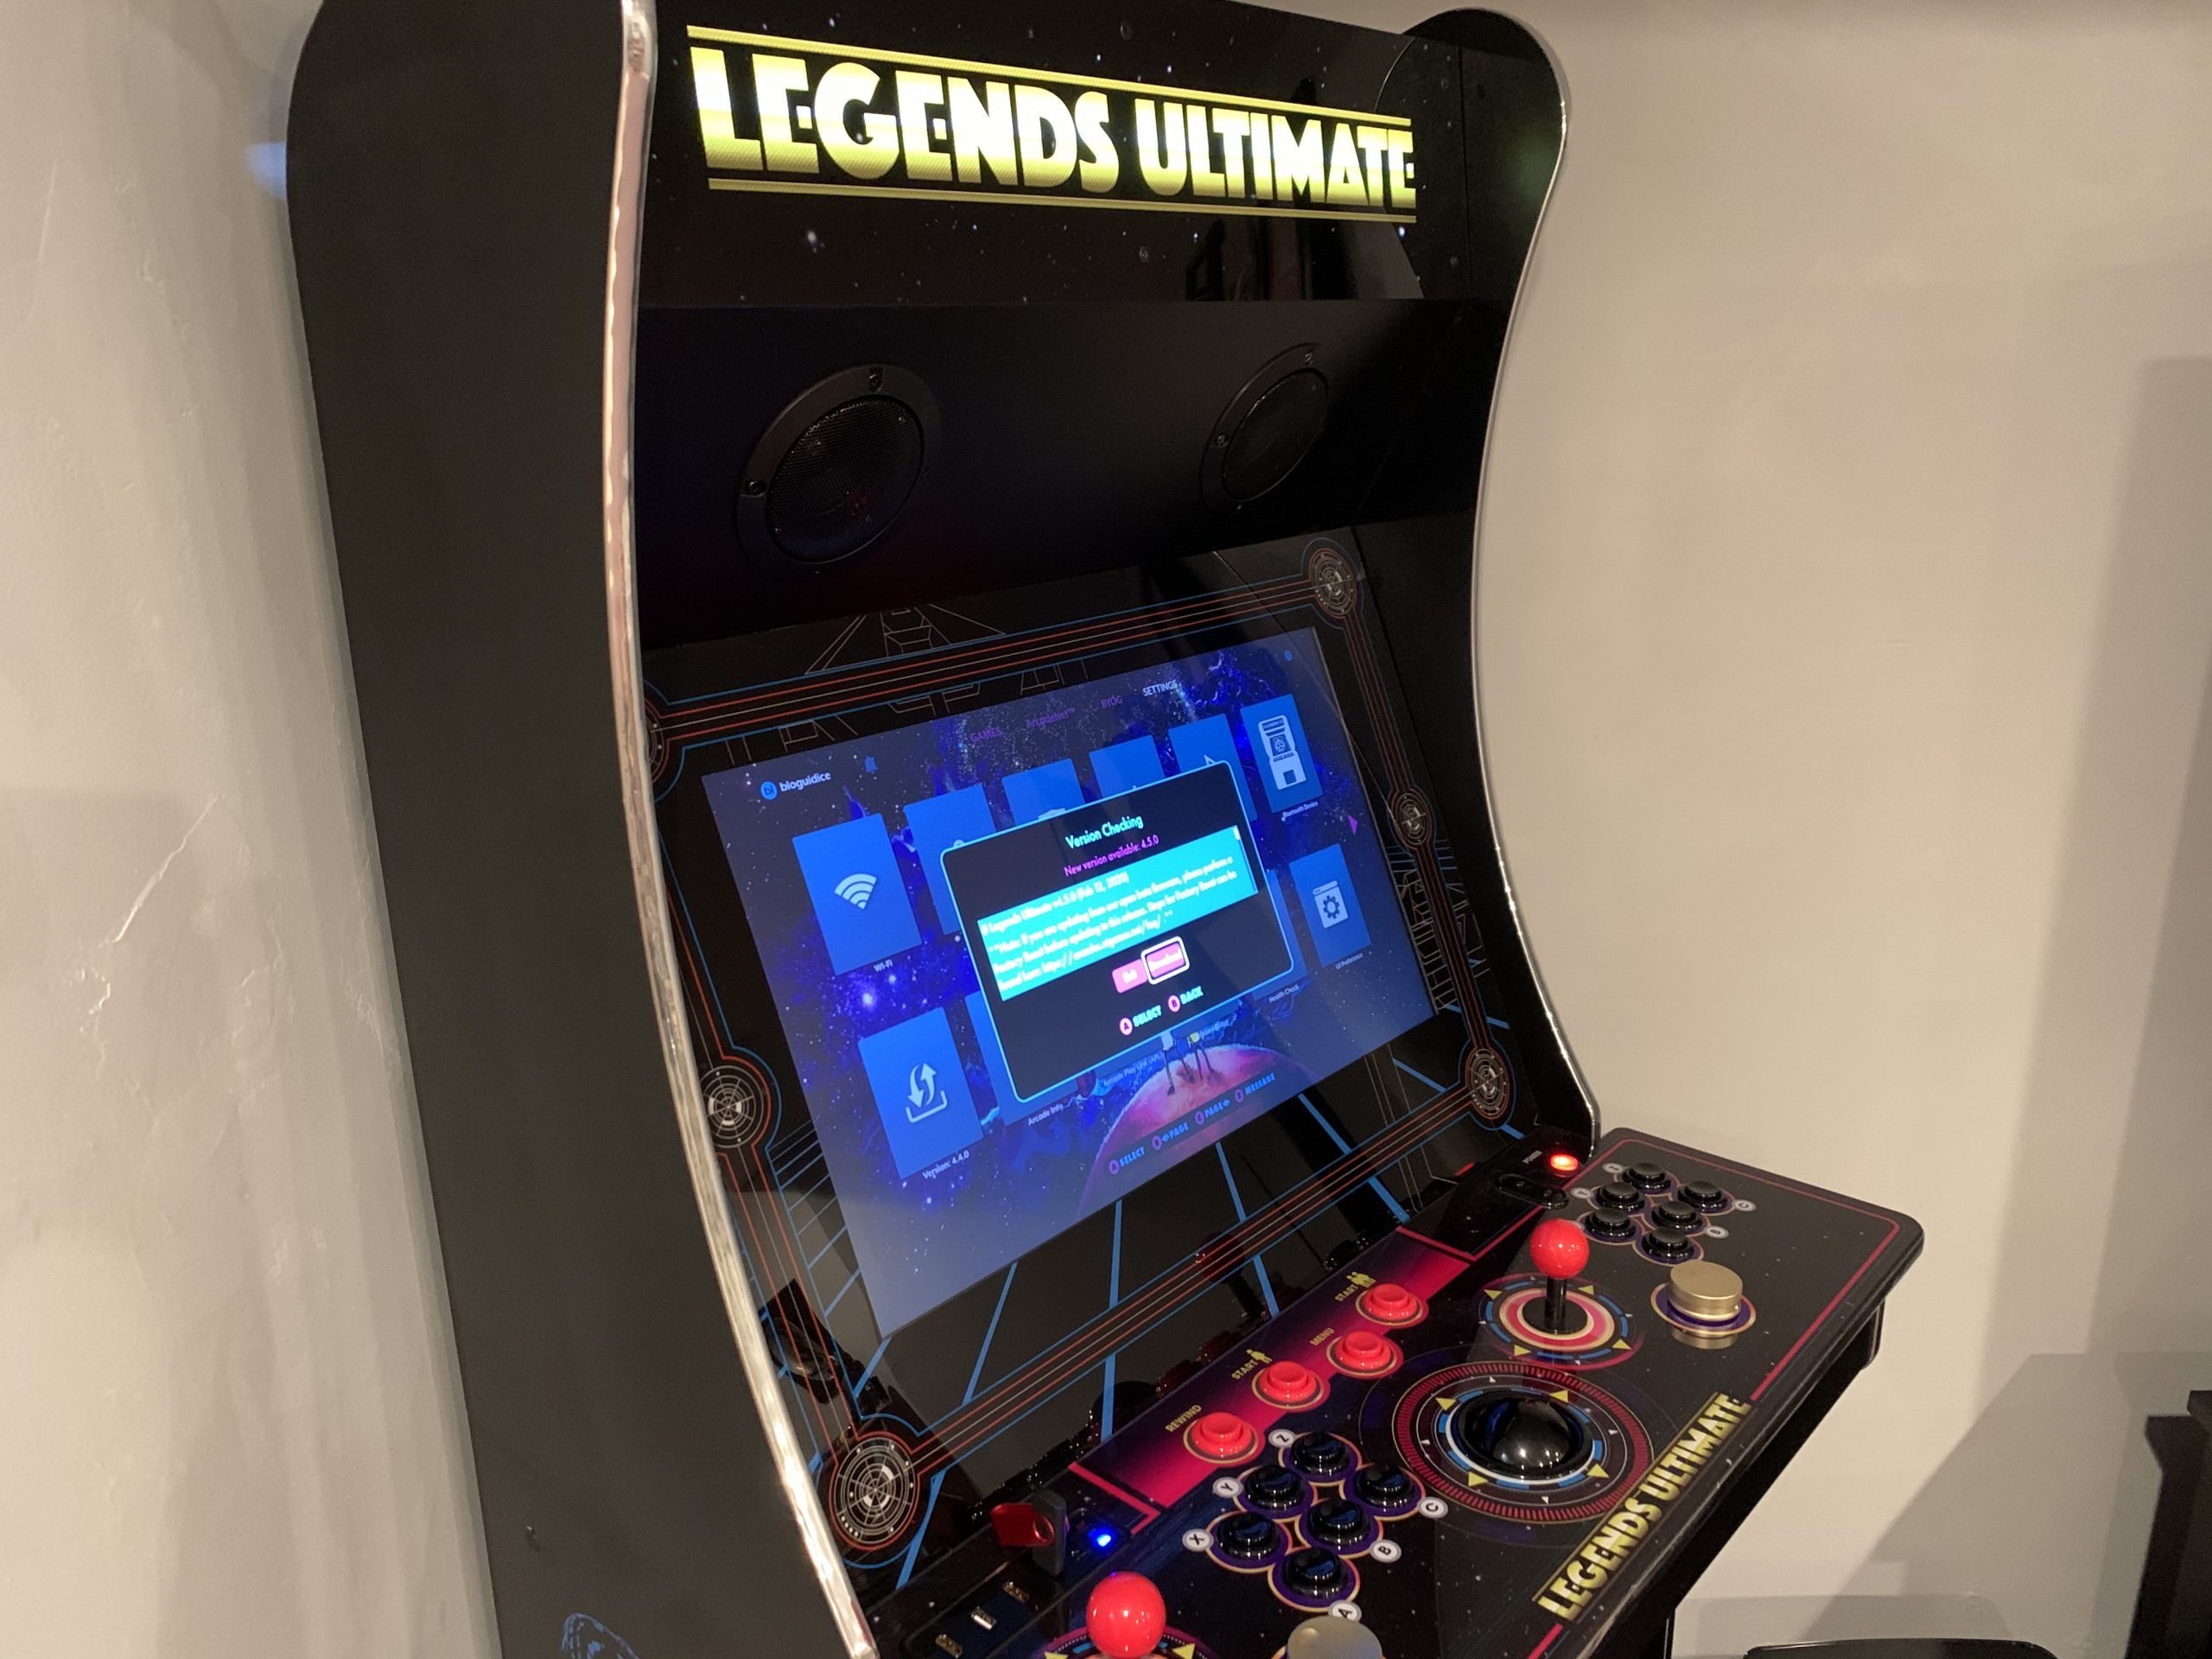 ArcadeNet Games Leaderboards - Legends Ultimate